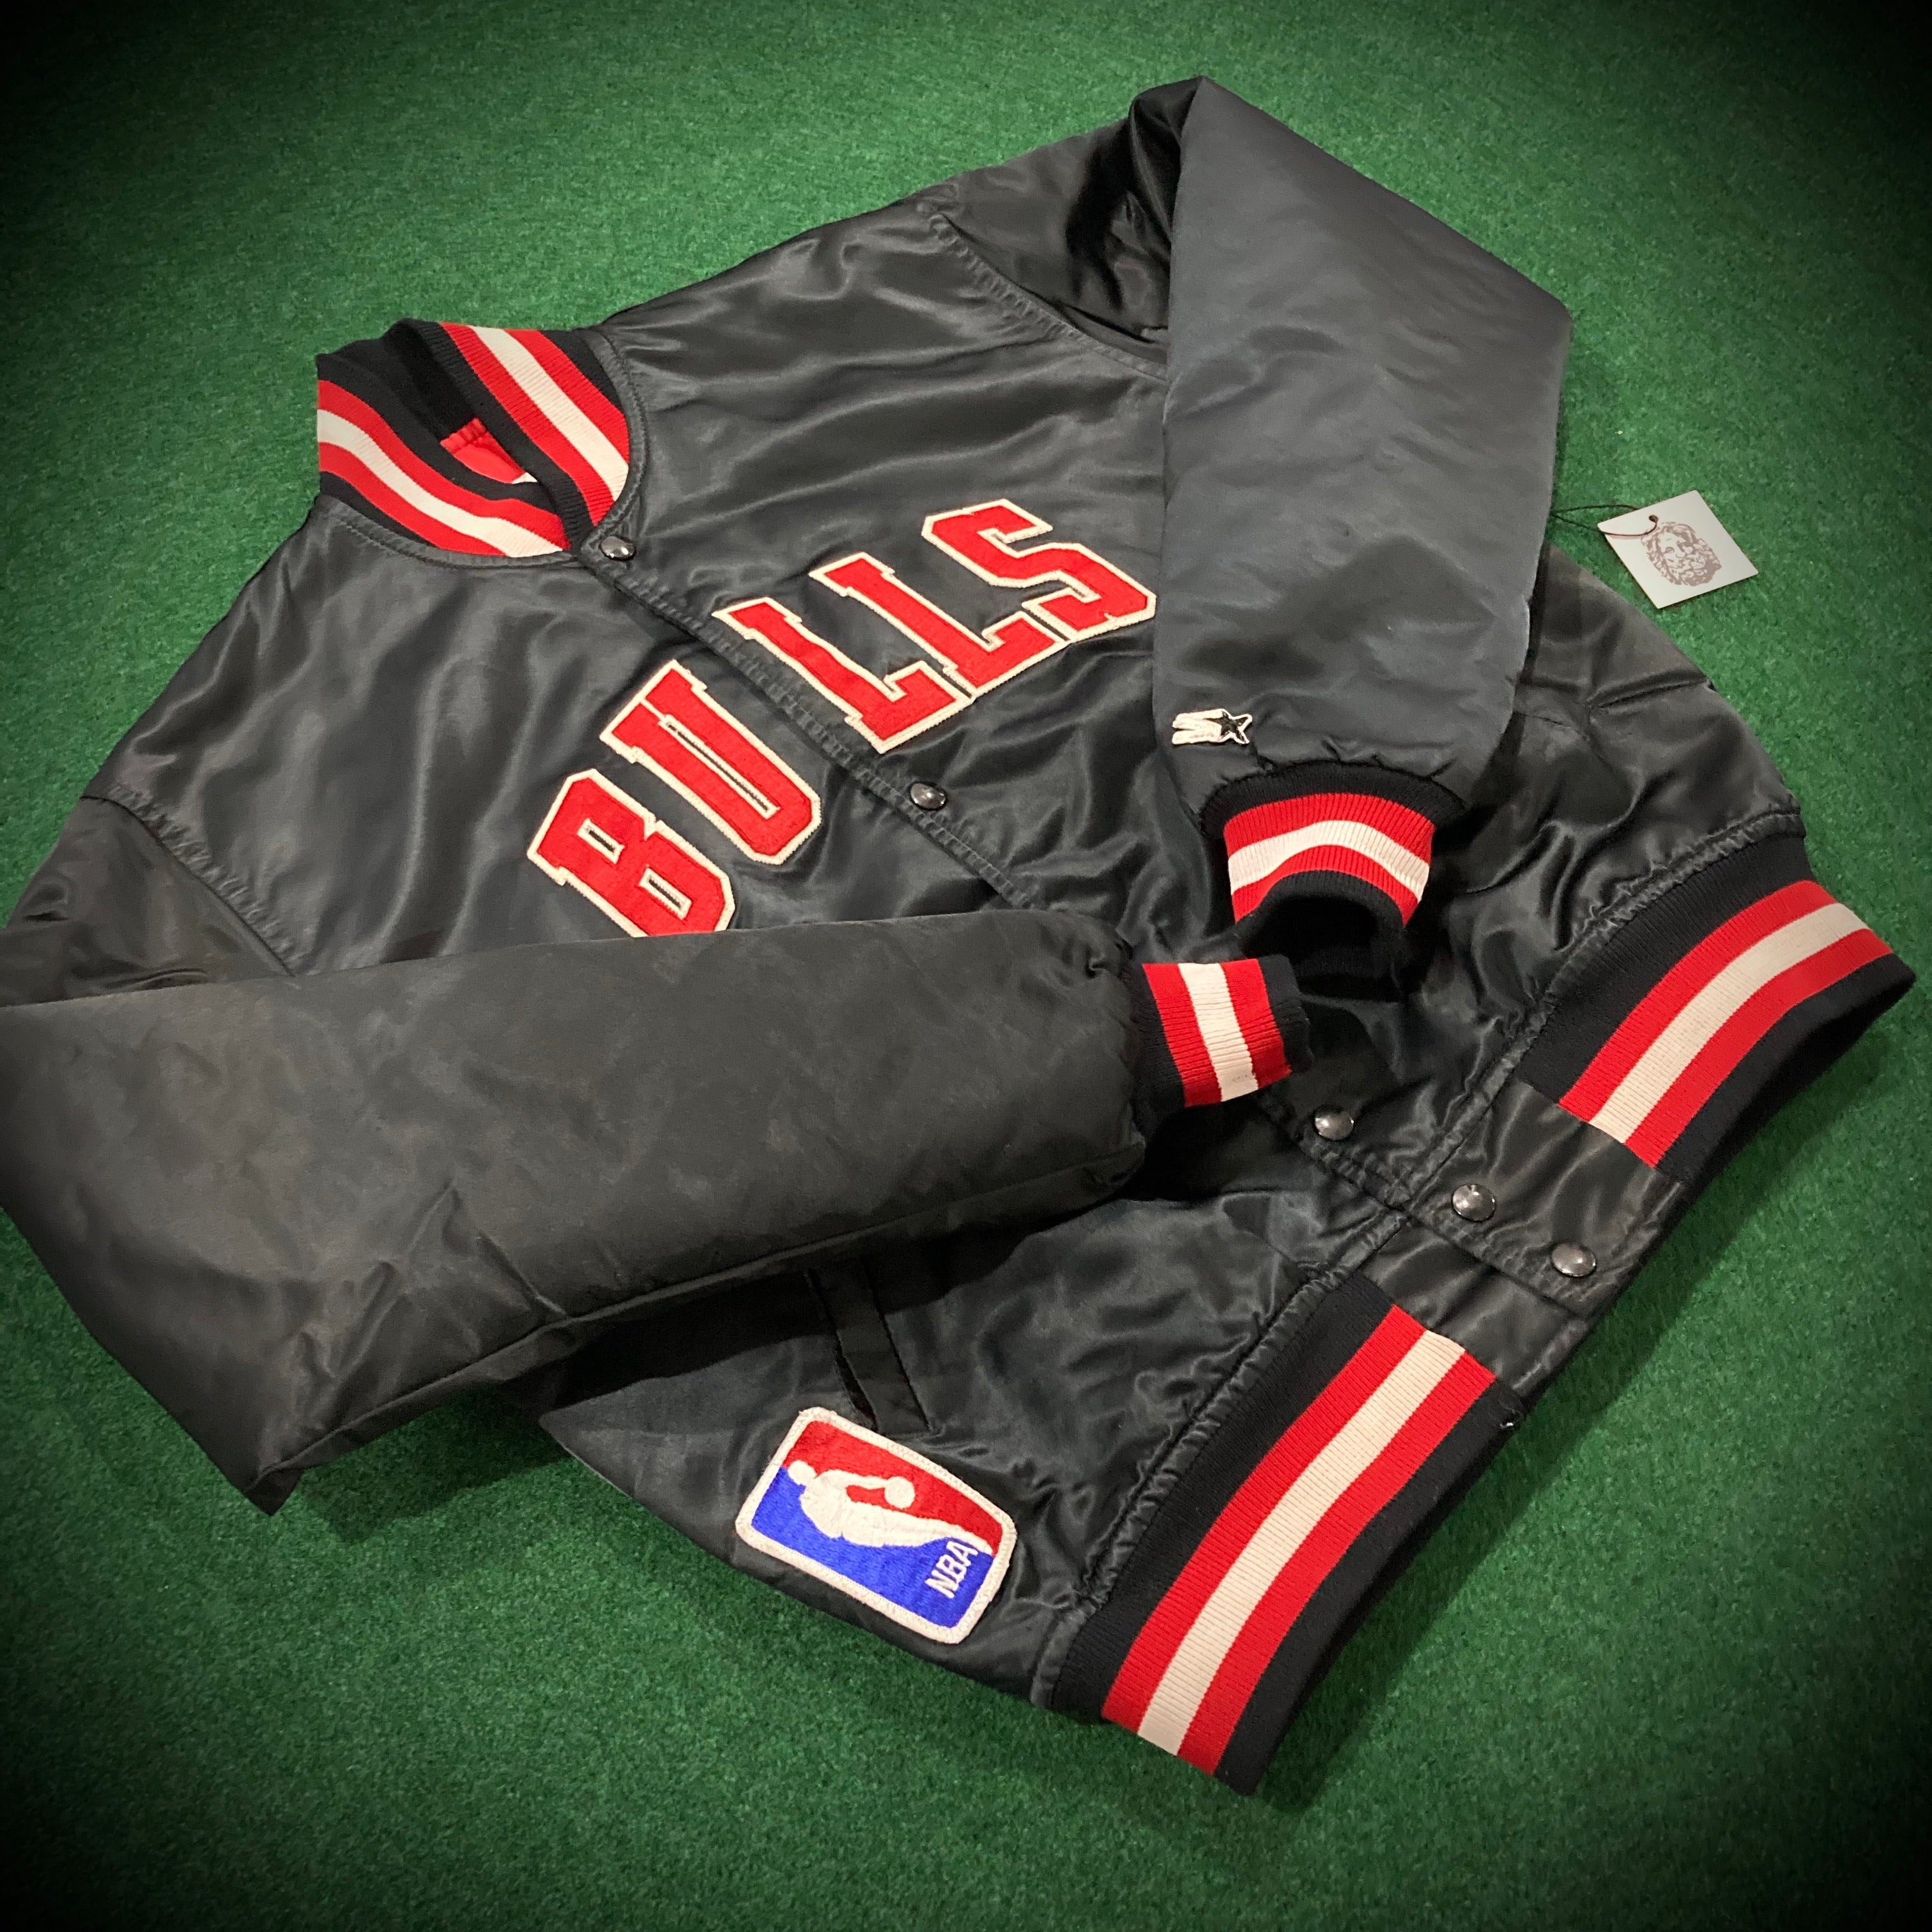 Vintage Chicago Bulls Bomber Jacket